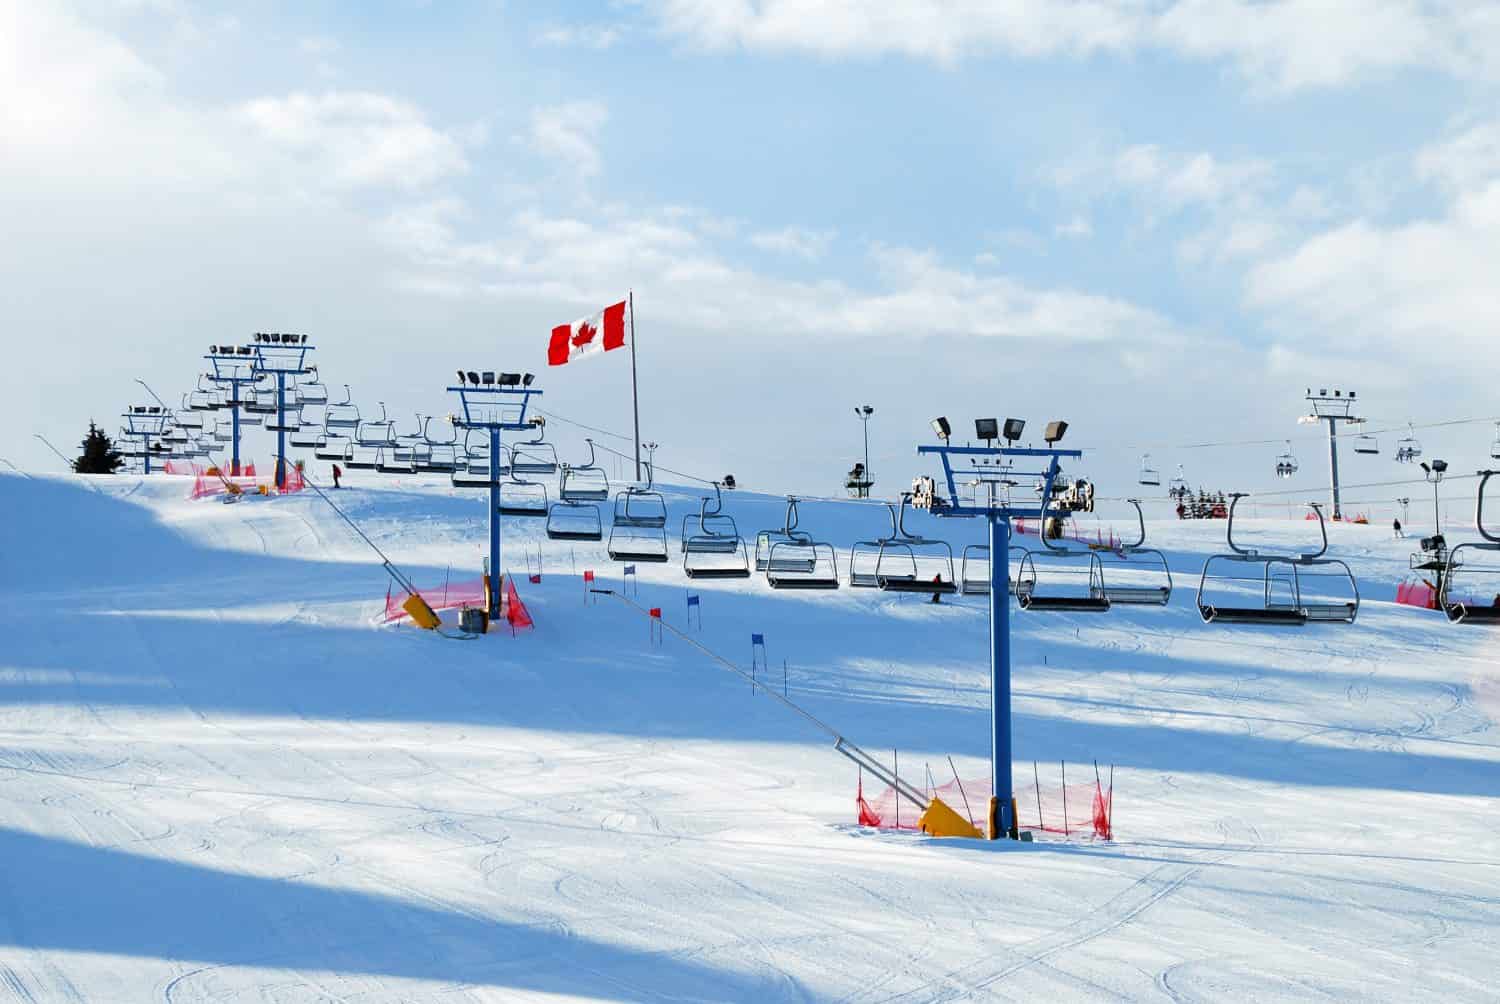 ski hill at canada olympic park, calgary